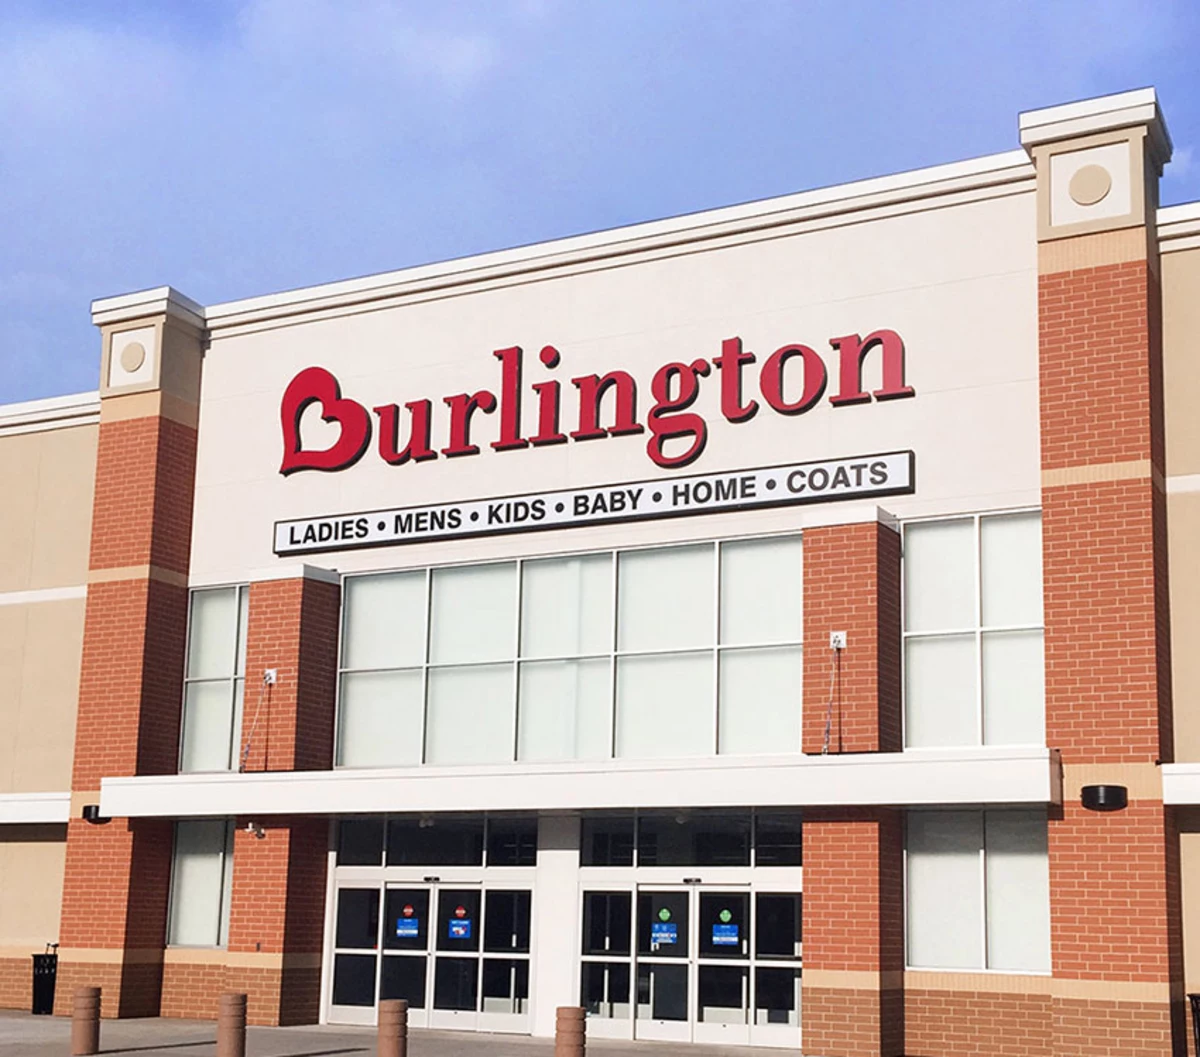 Burlington Coat Factory: IN STORES: Handbag savings for fall